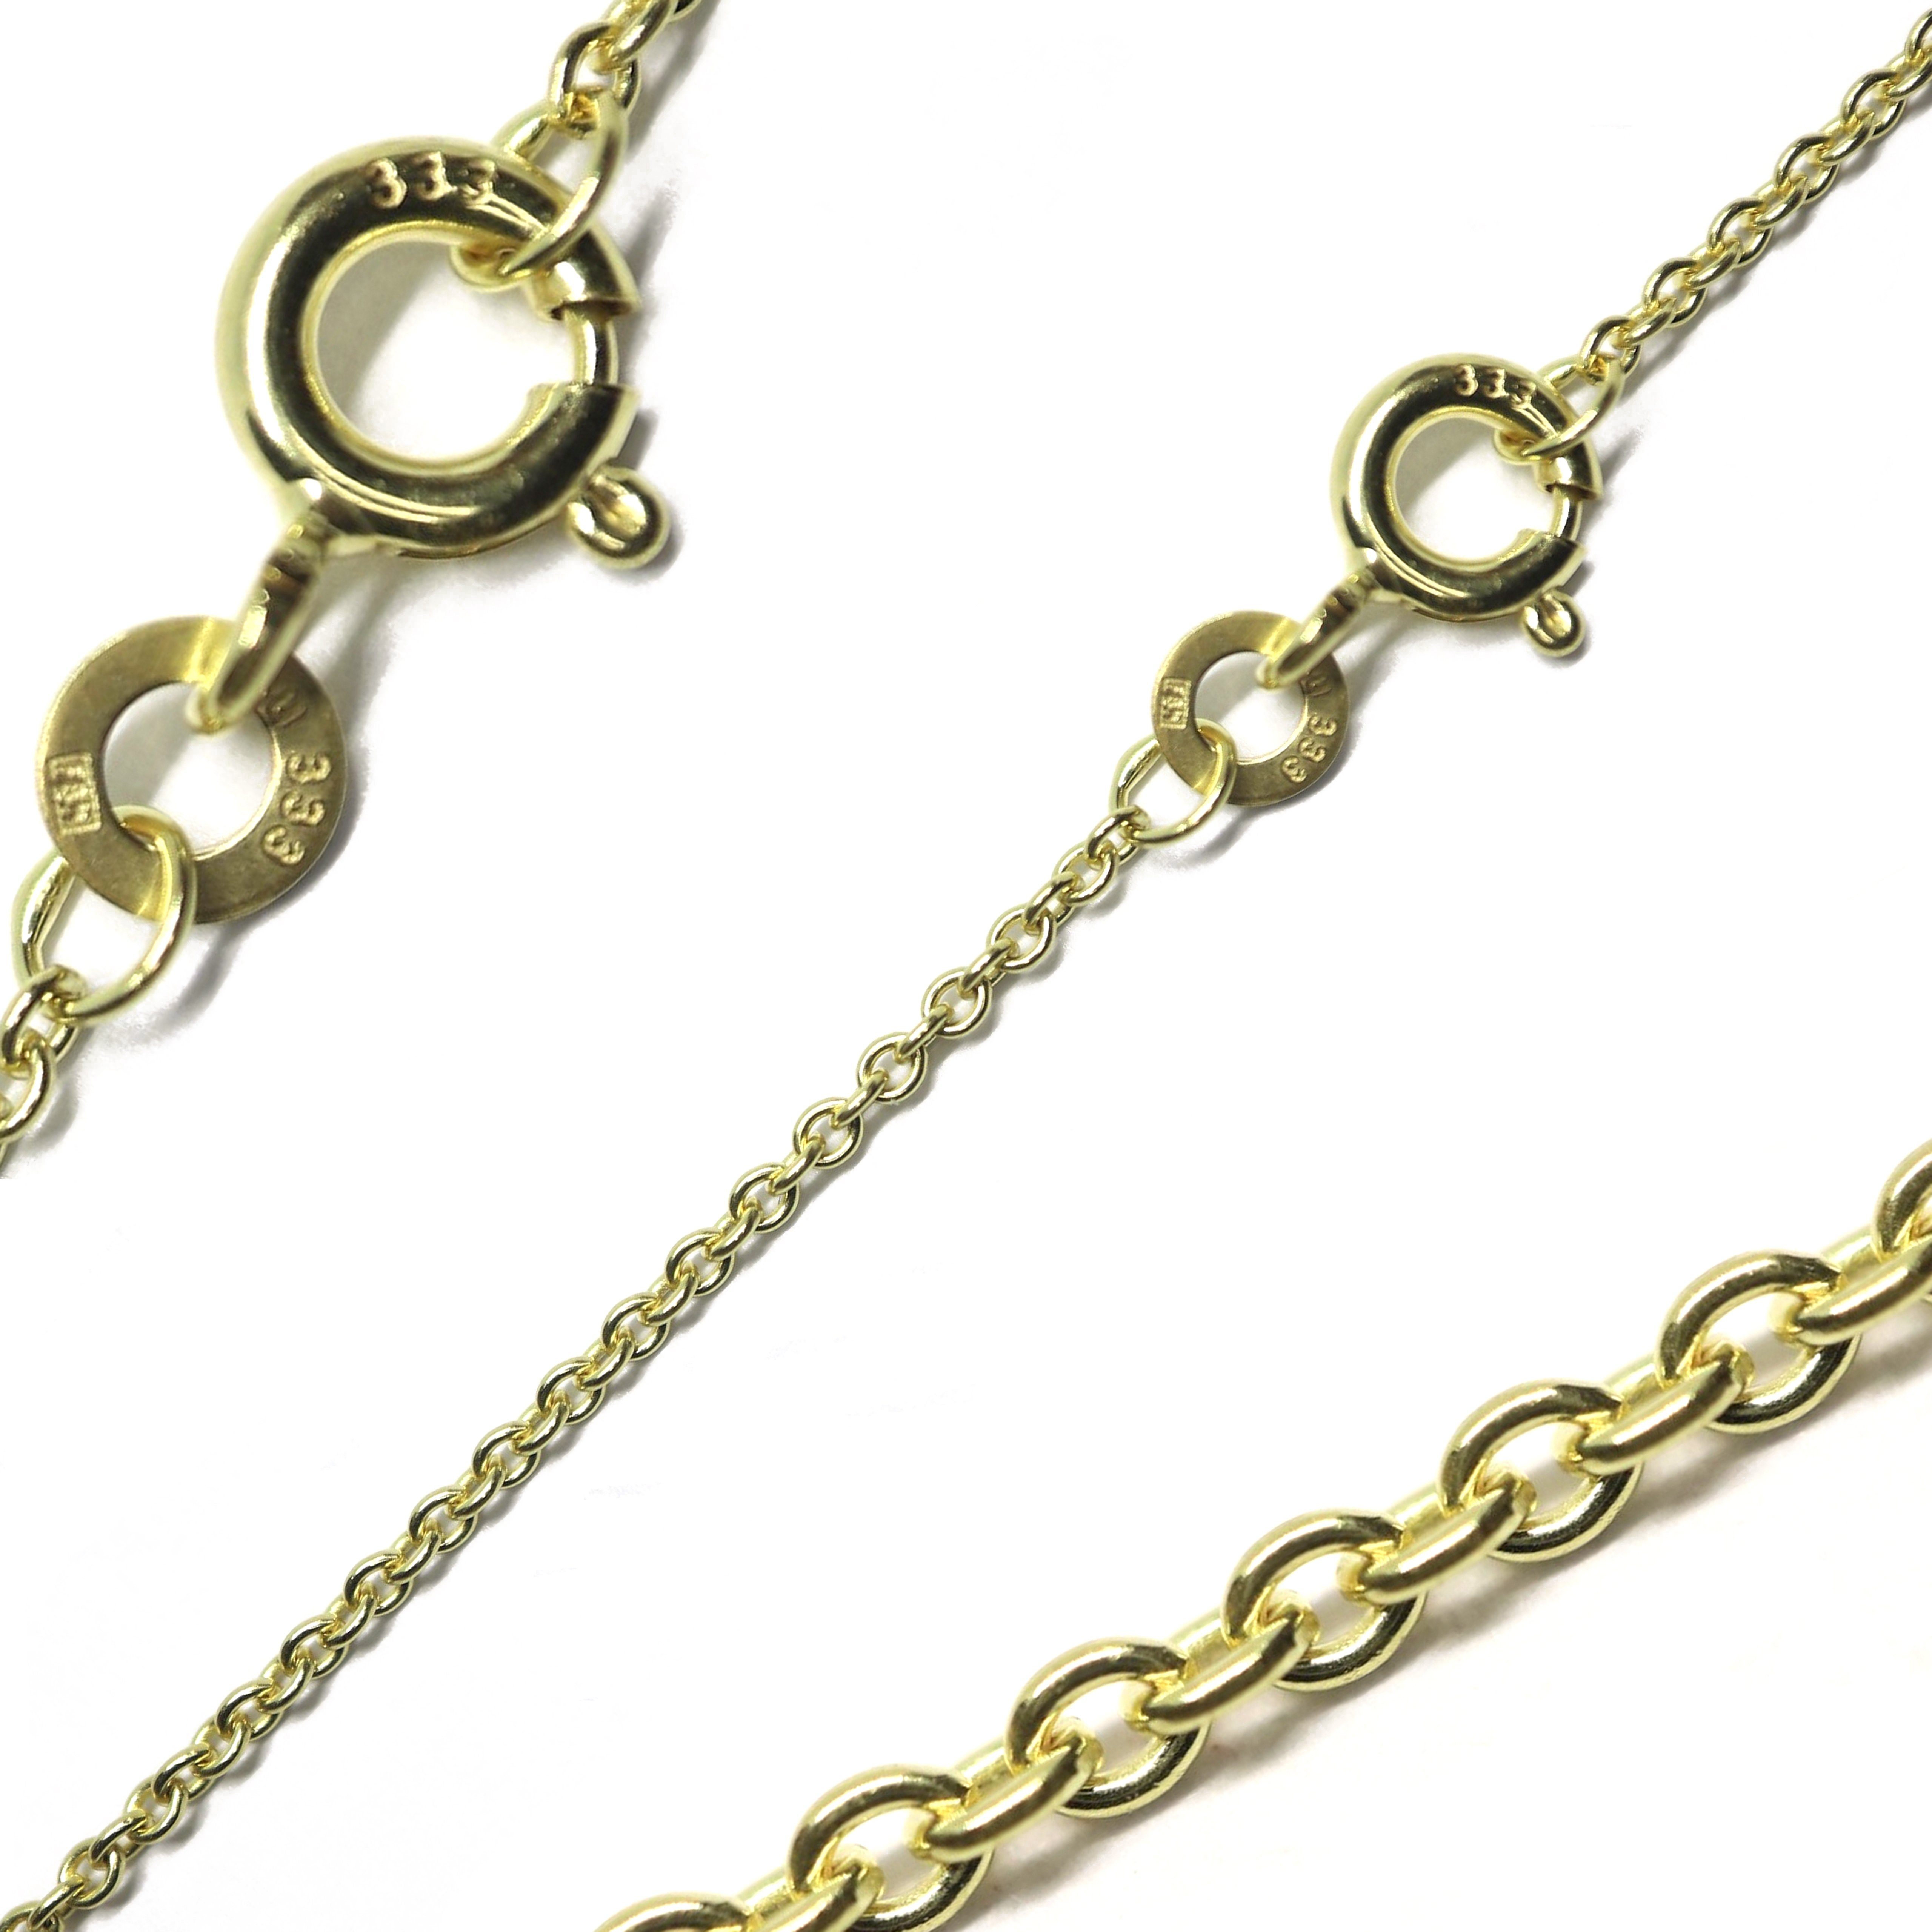 G & J Collier Ankerkette rund 333 8K Gold 1,30mm 45-60cm hochwertige edle Halskette (inkl. Schmucketui), Made in Germany